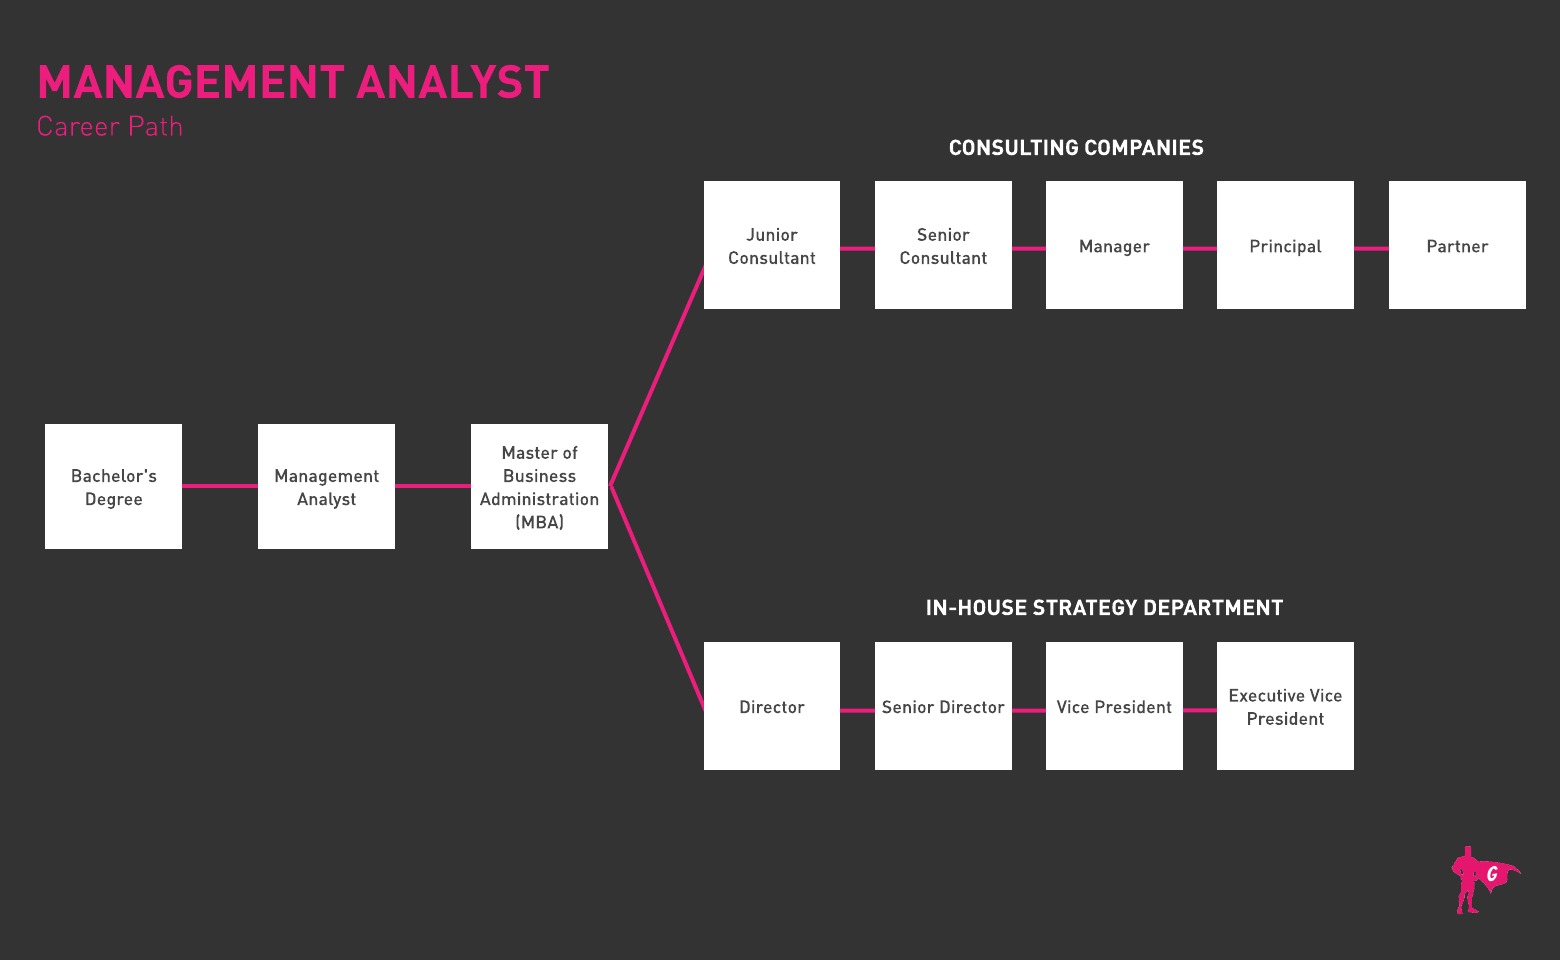 Management Analyst roadmap